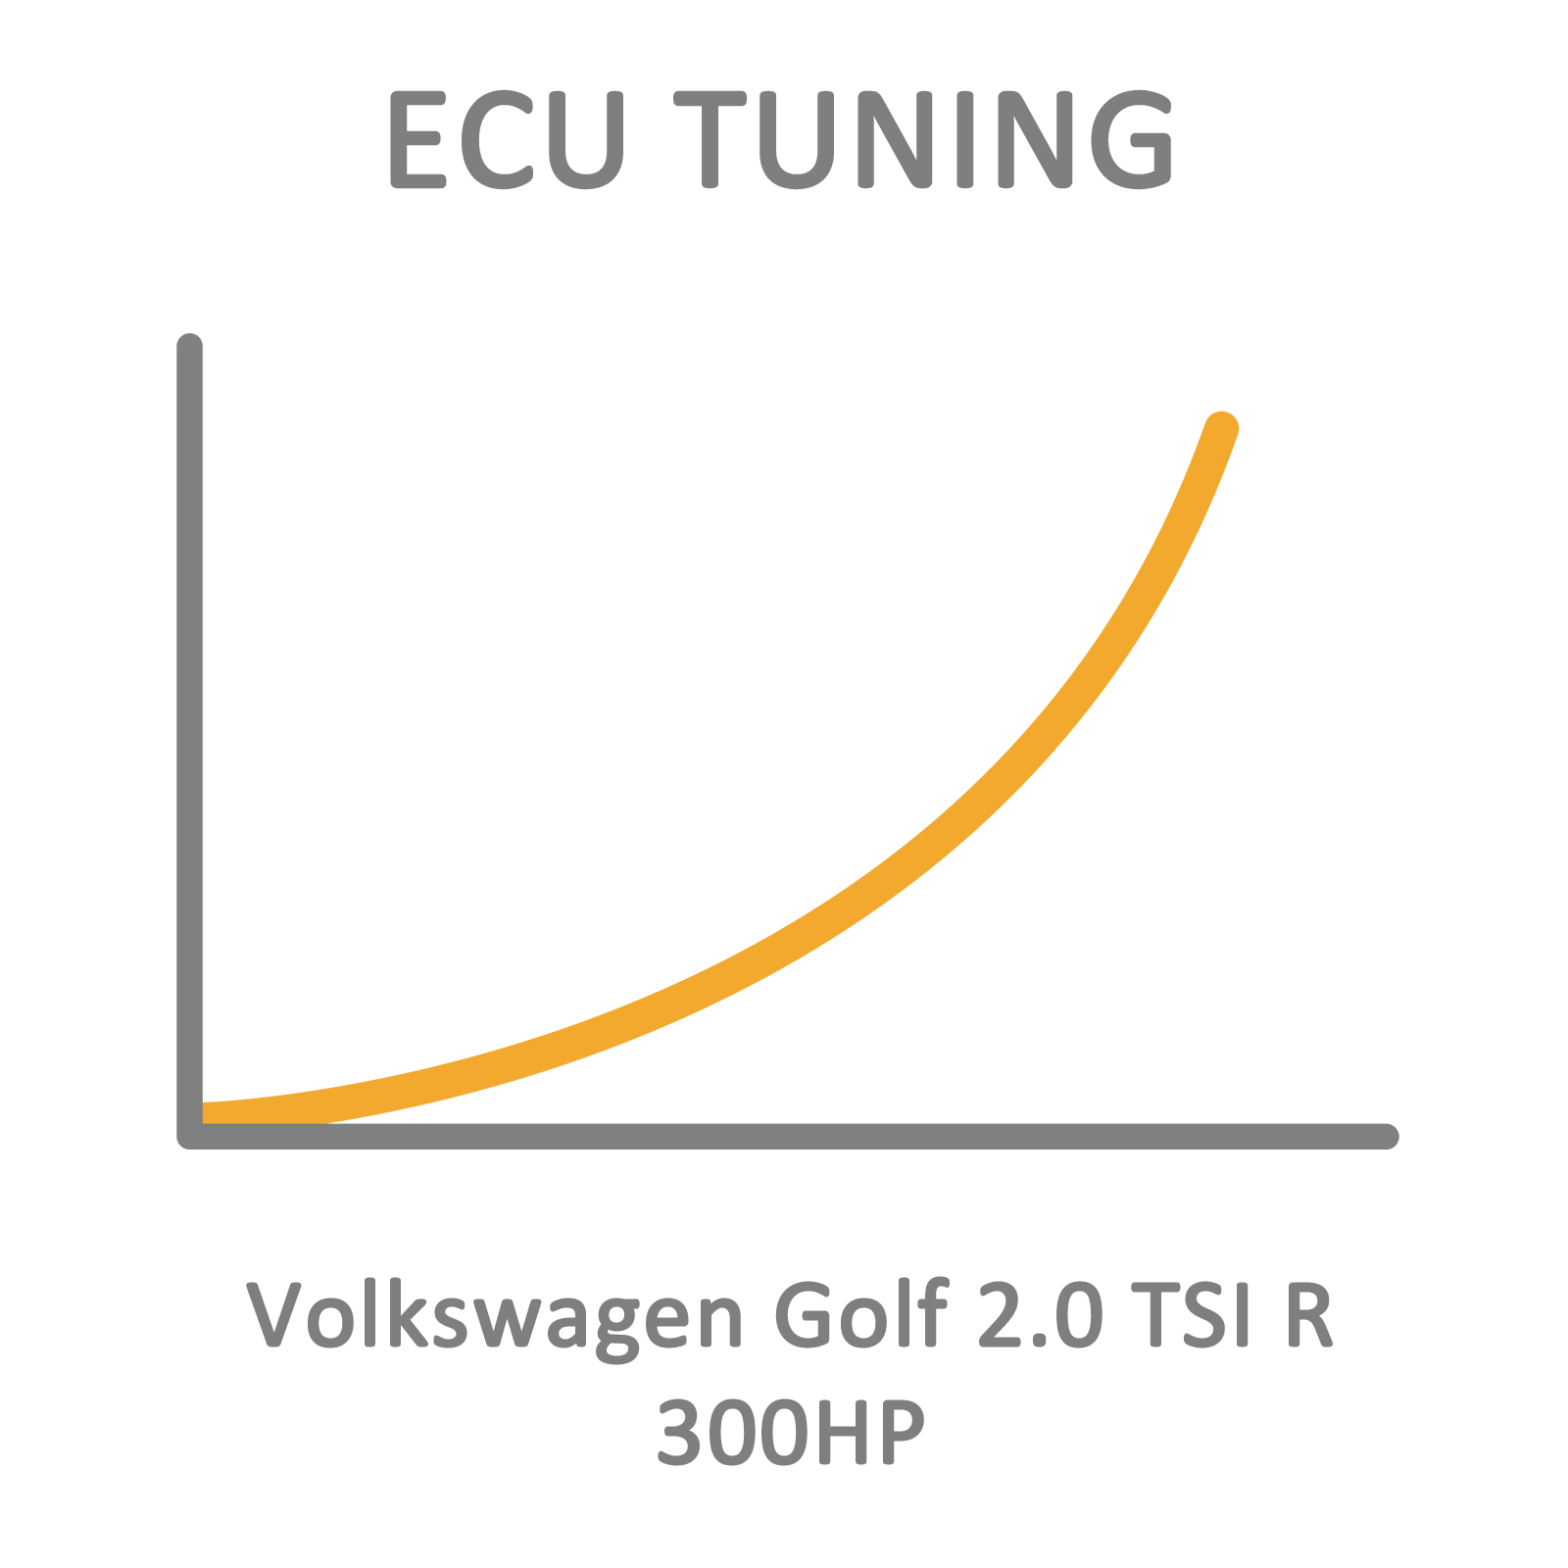 Volkswagen Golf 2.0 TSI R 300HP ECU Tuning Remapping